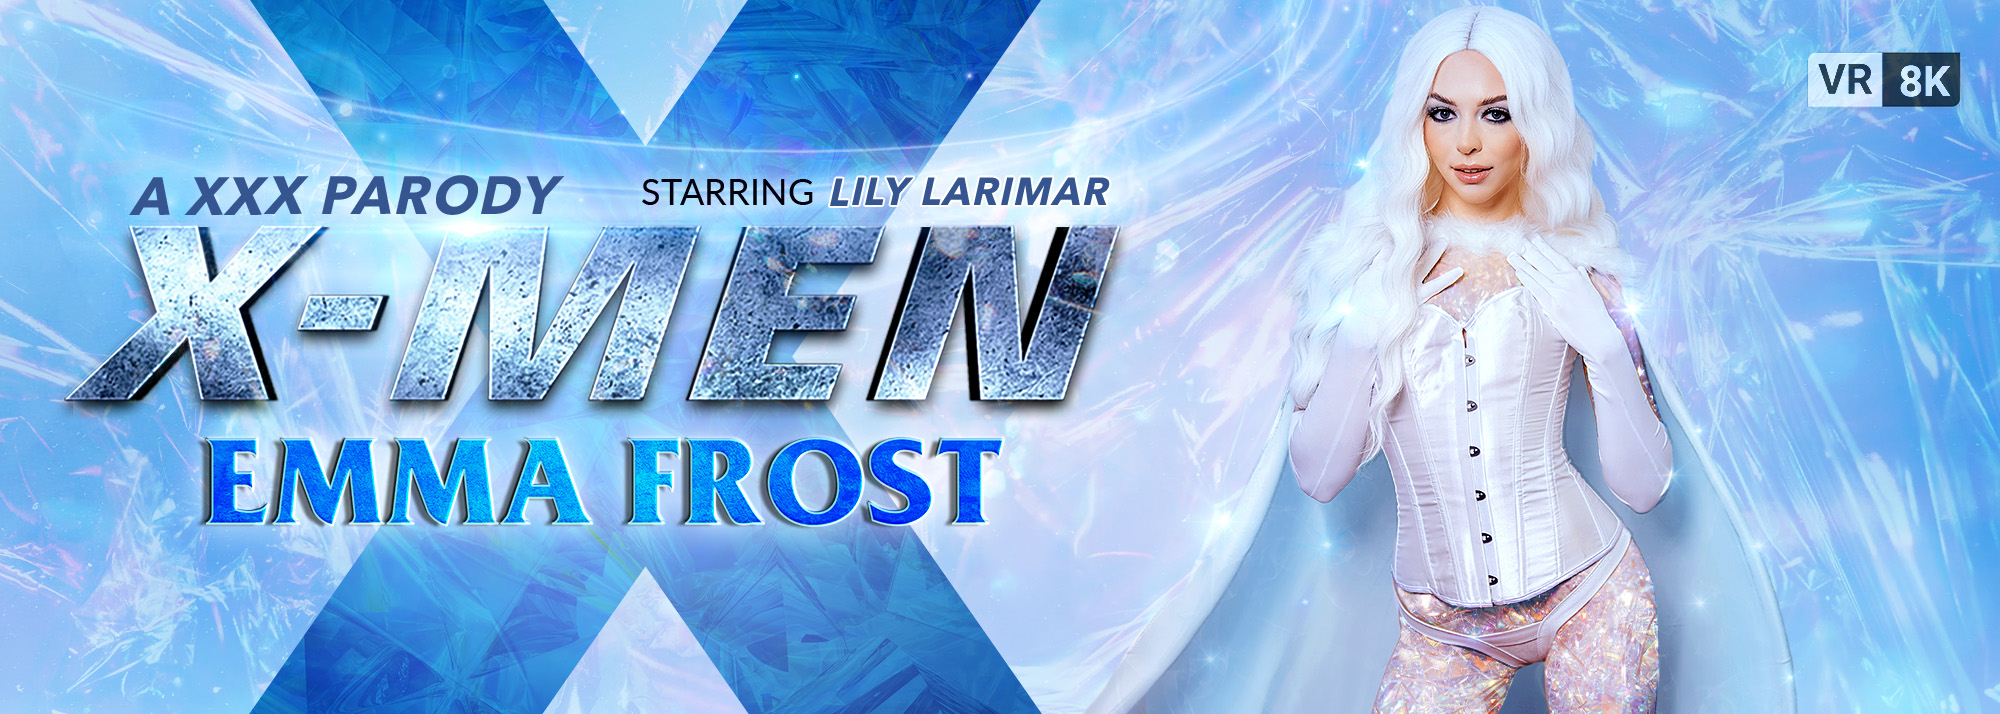 X-Men: Emma Frost (A XXX Parody) - VR Porn Video, Starring Lily Larimar VR